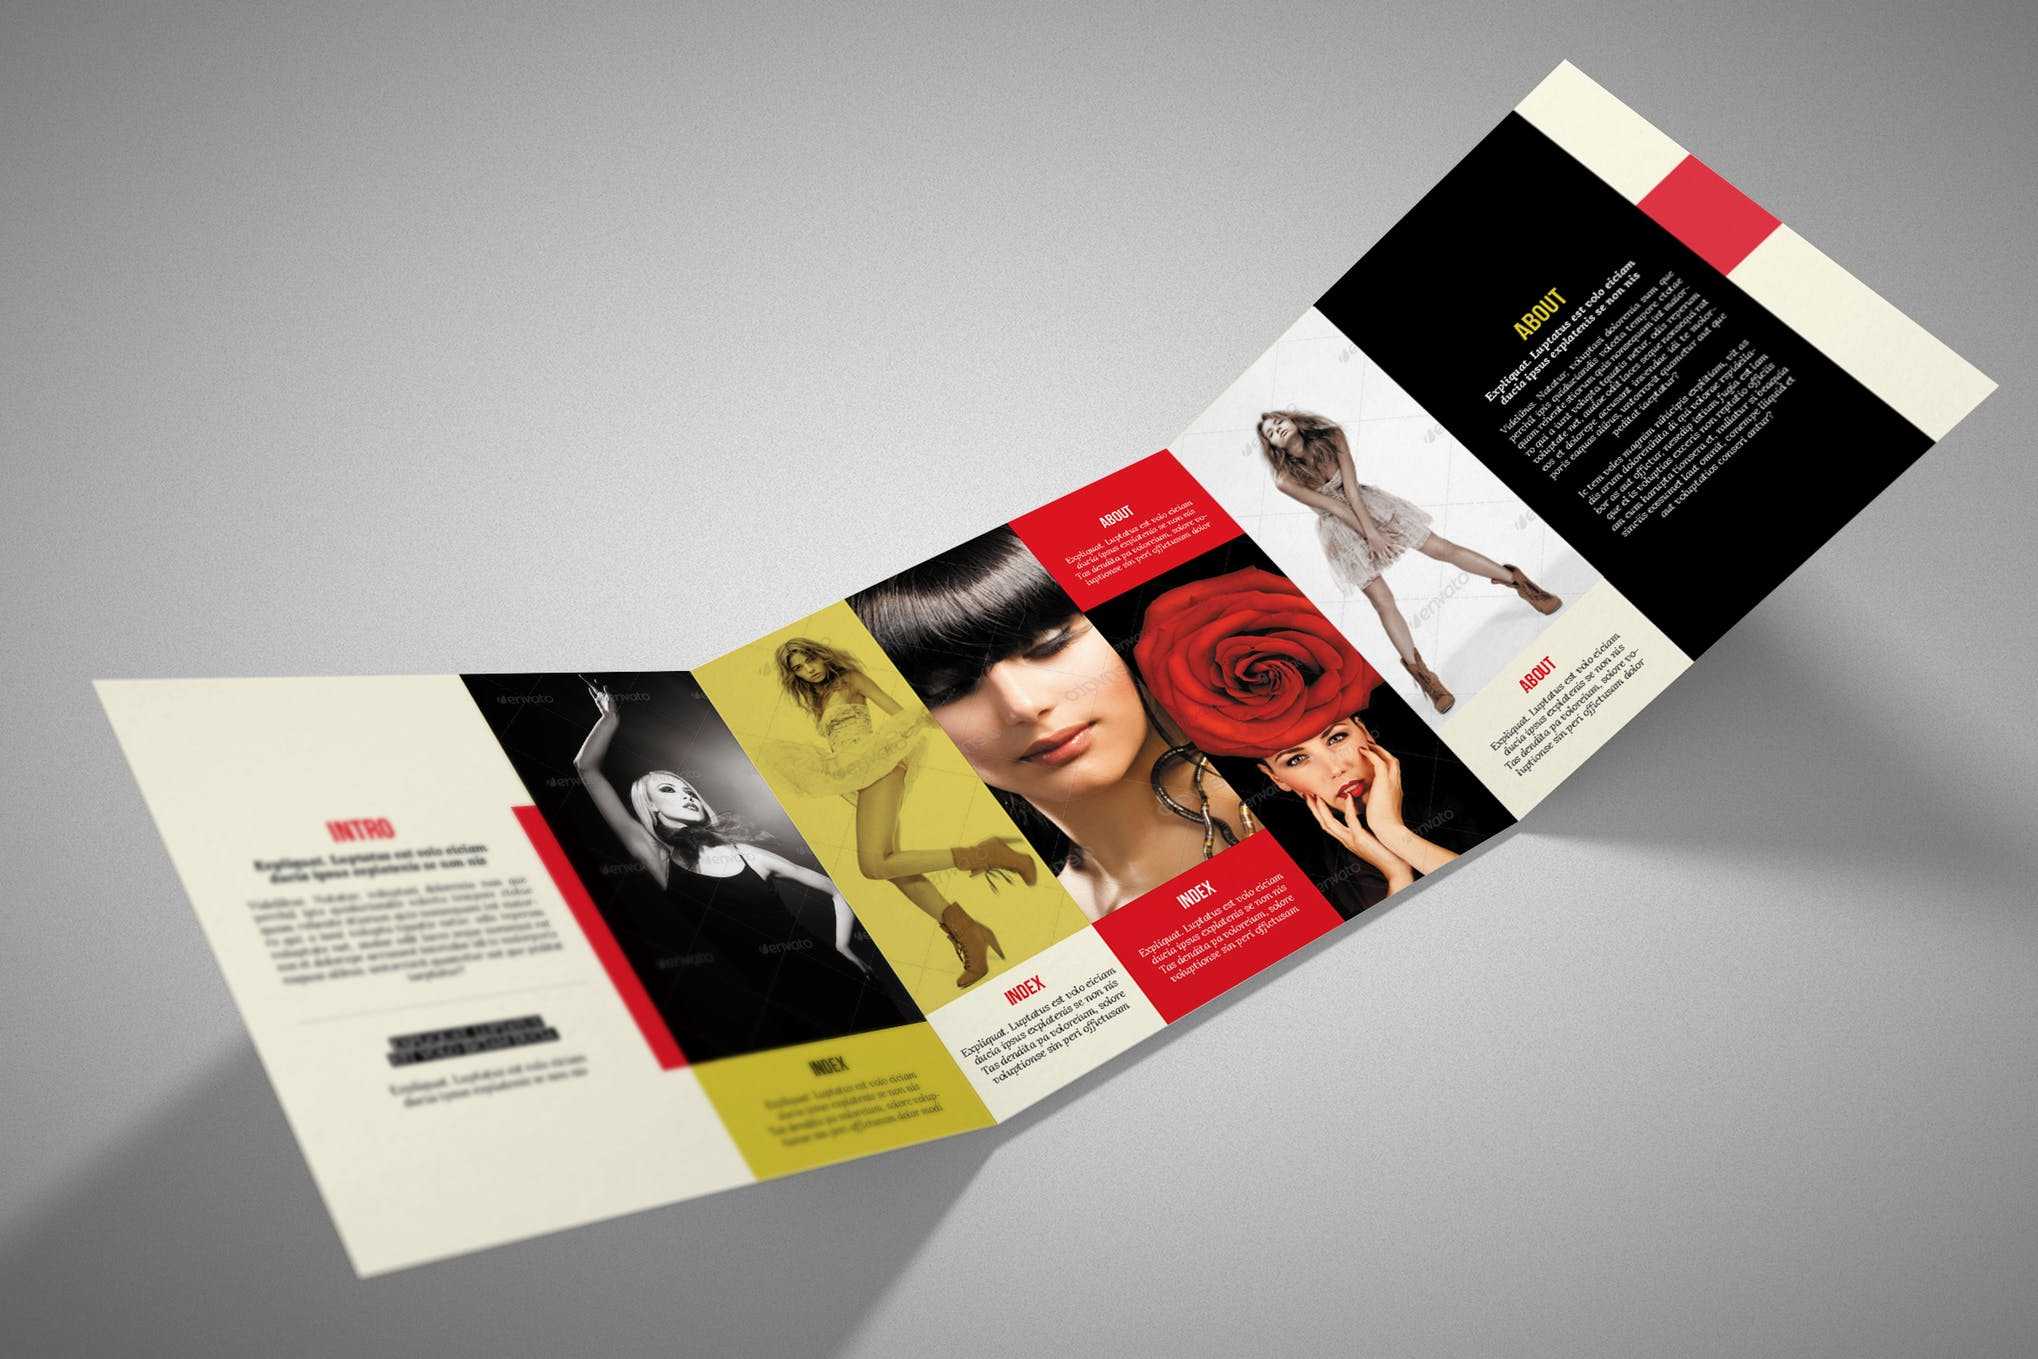 009 Adobe Indesign Tri Fold Brochure Template Ideas Trifold Intended For Adobe Indesign Tri Fold Brochure Template